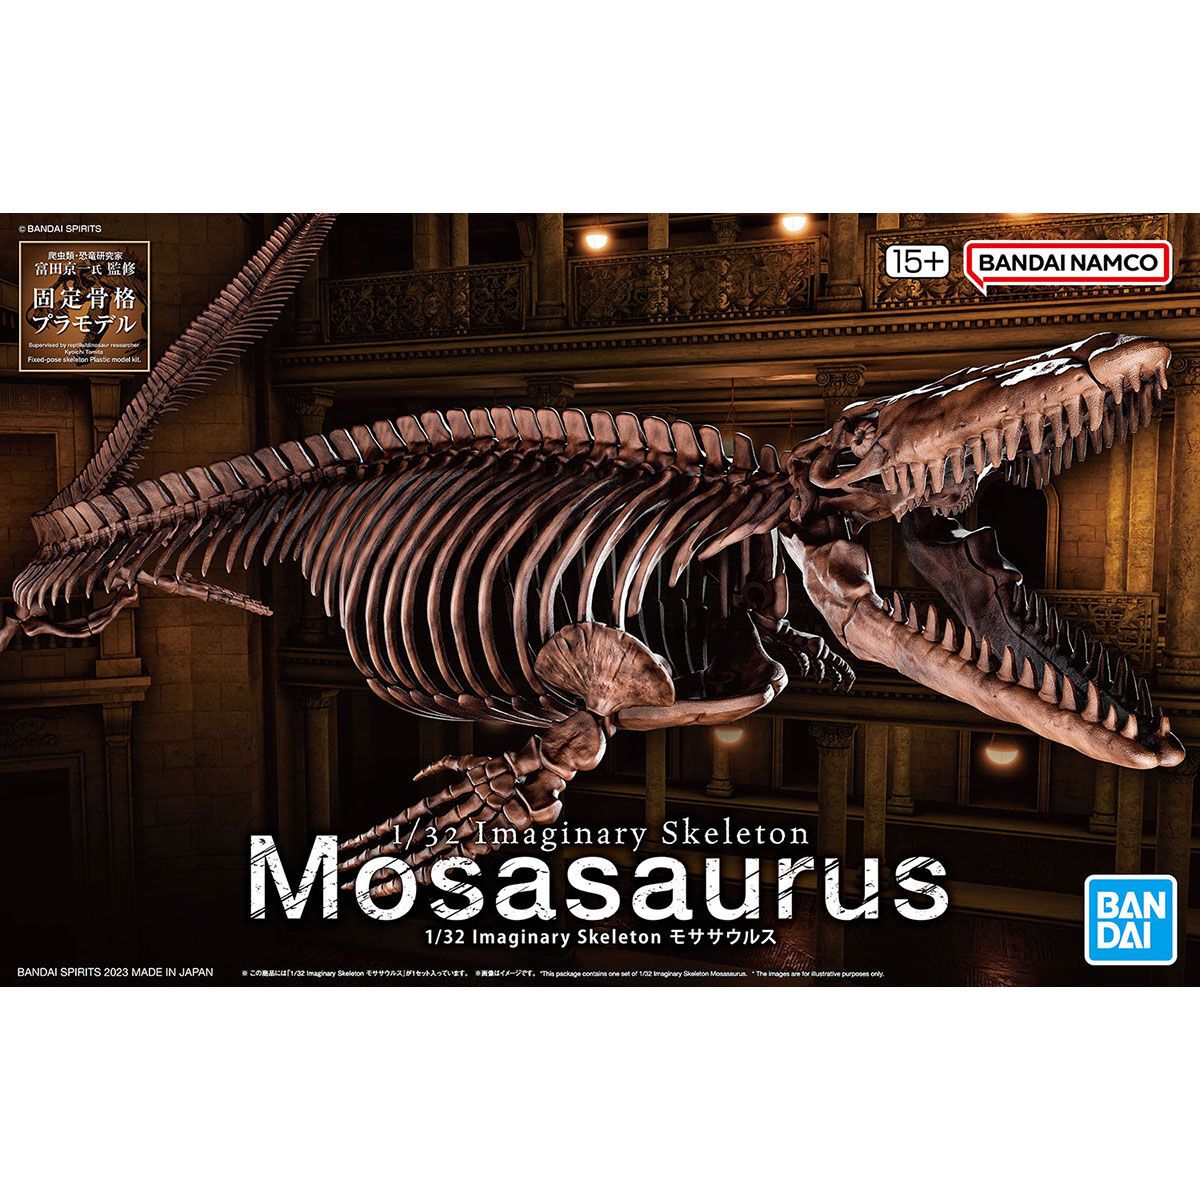 Bandai 1/32 Imaginary Skeleton Mosasaurus Model Kit